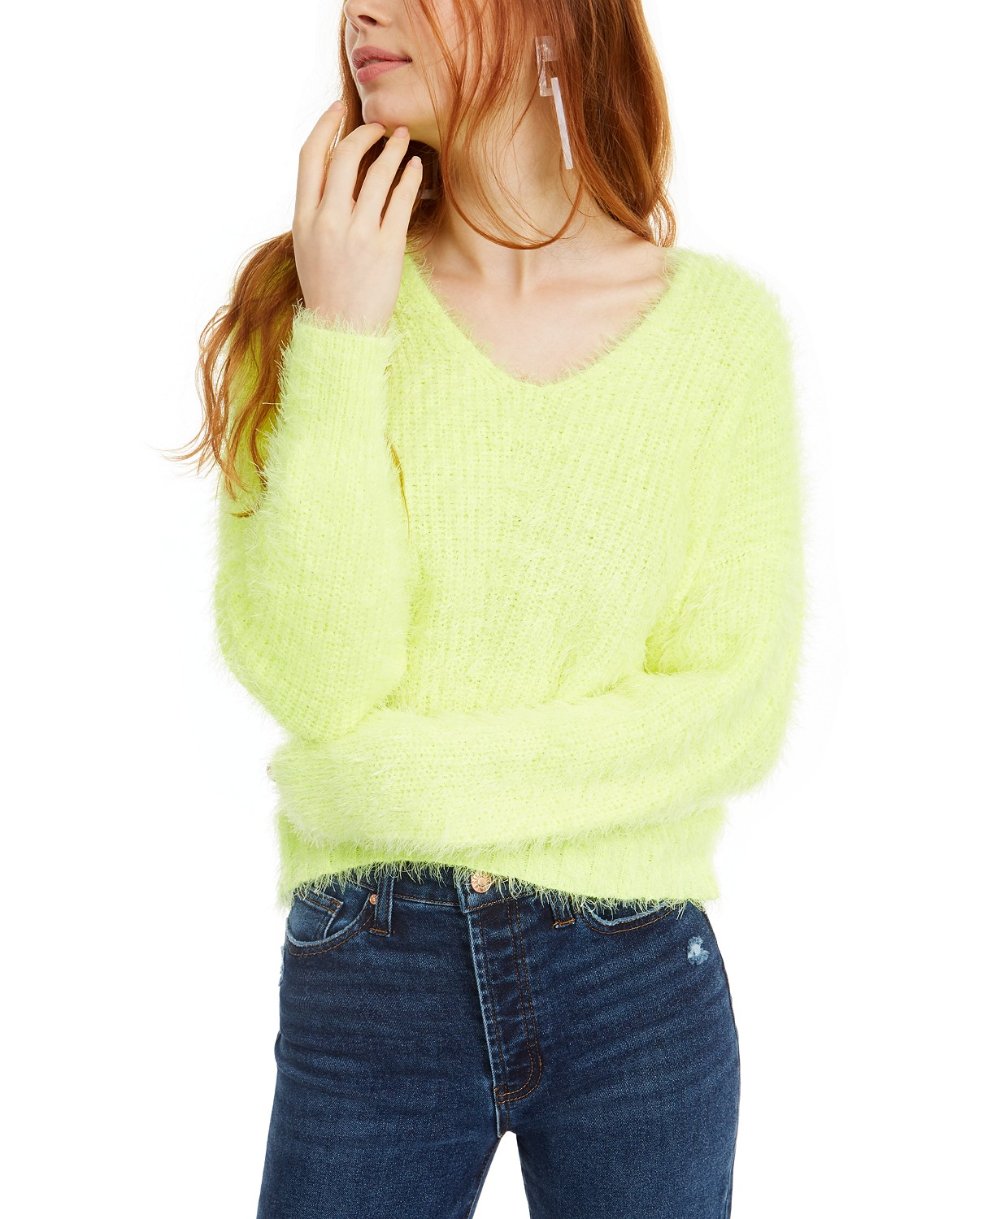 Freshman Juniors Women's Fuzzy V-Neck Sweater Yellow Size Extra Small